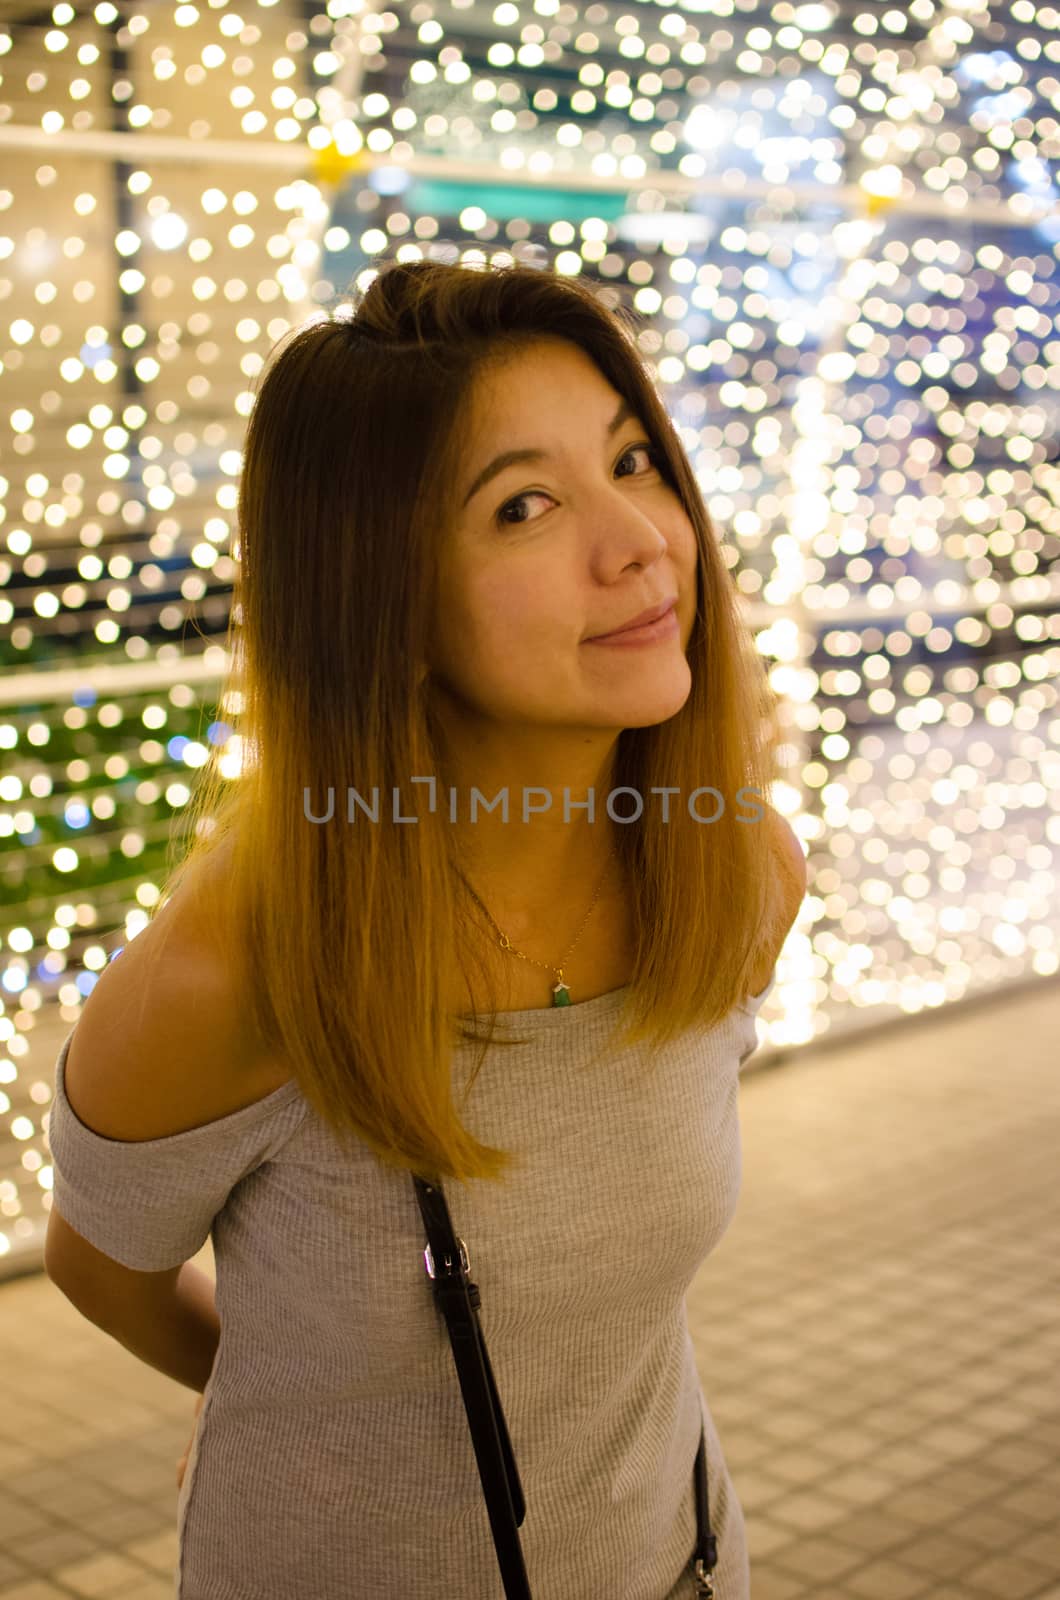 Portrait Asian background bokeh lights.